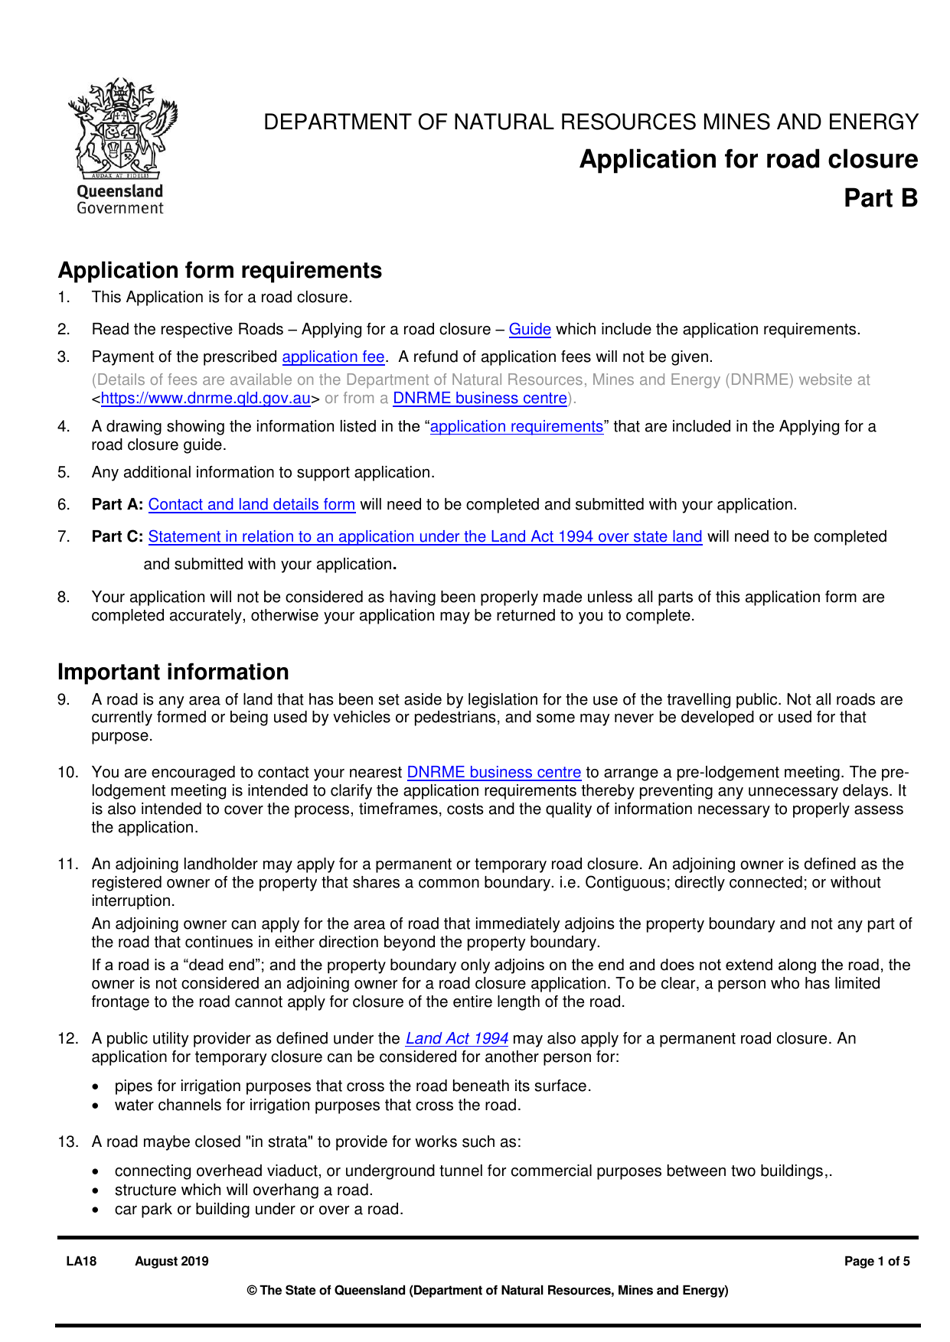 Form LA18 Part B Application for Road Closure - Queensland, Australia, Page 1